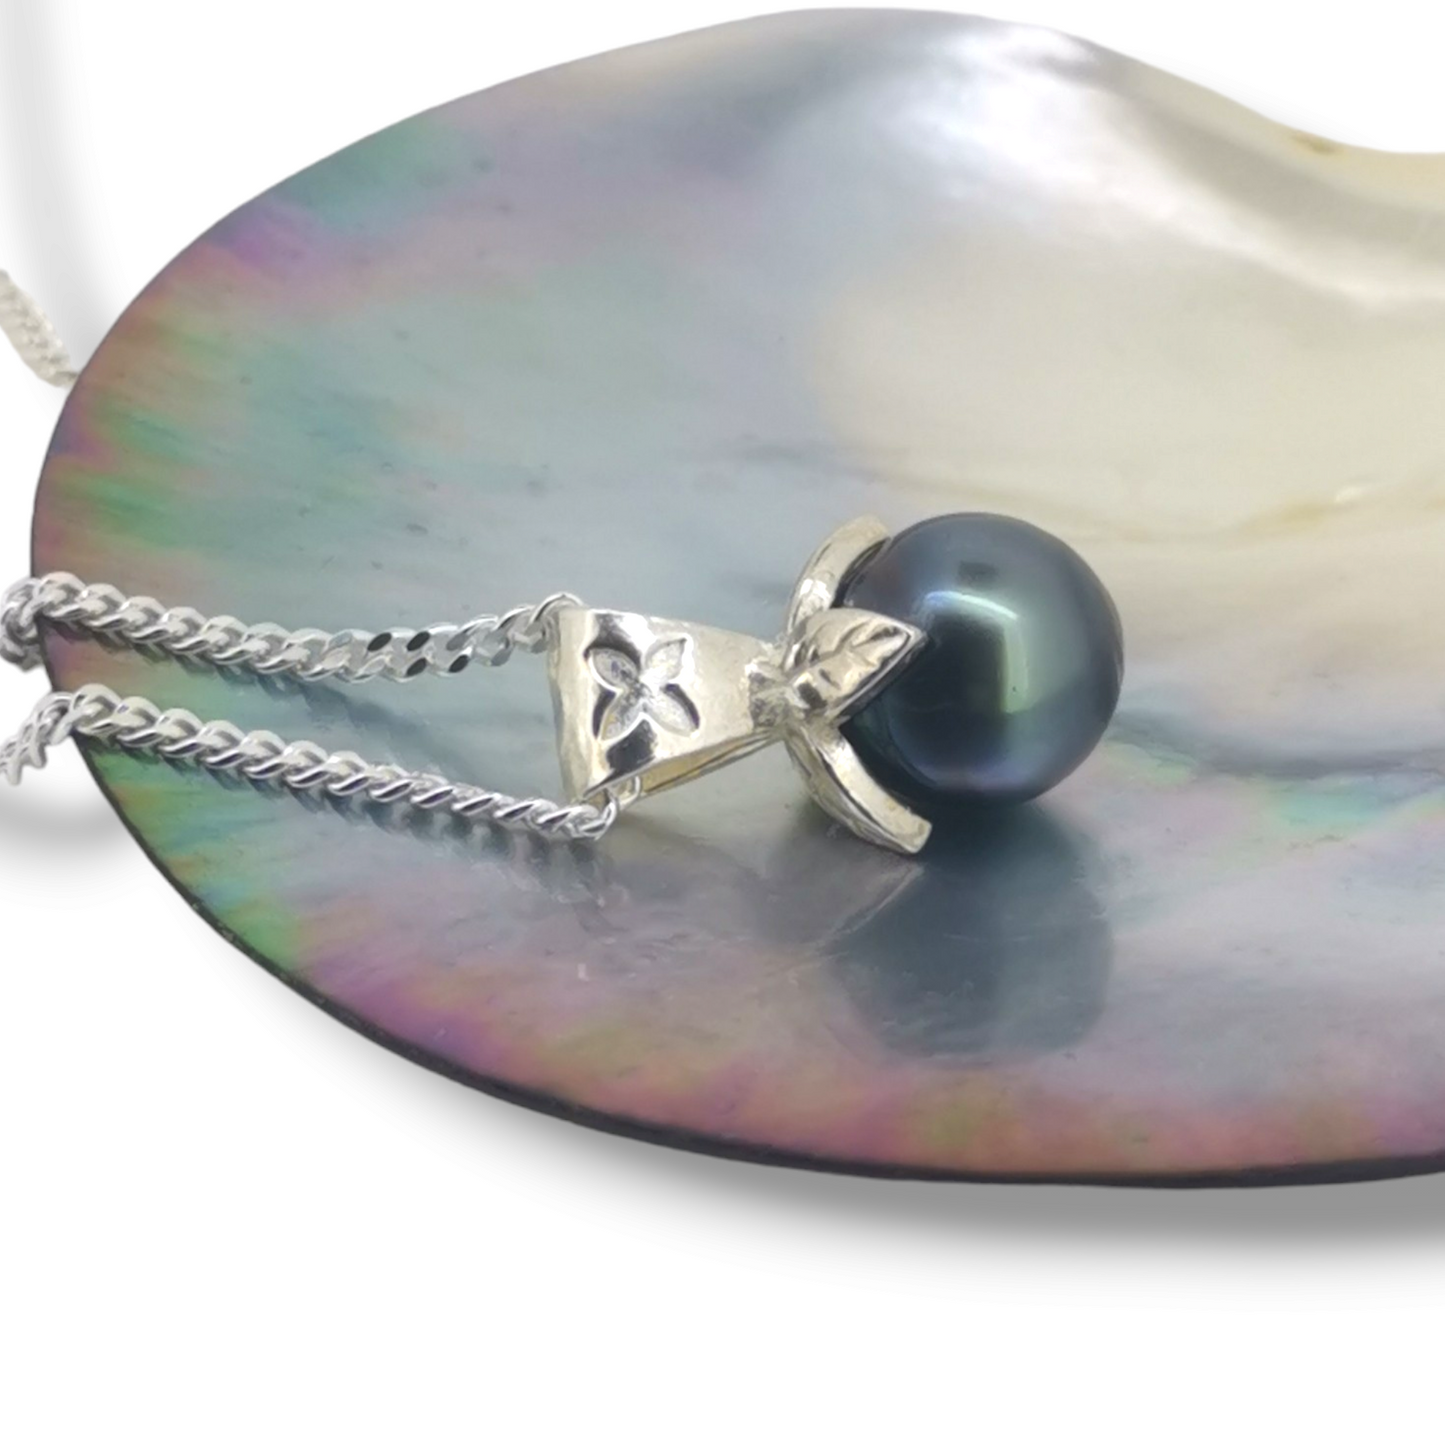 Lilikoi (passionfruit) Necklace-Necklace-Danika Cooper Jewellery